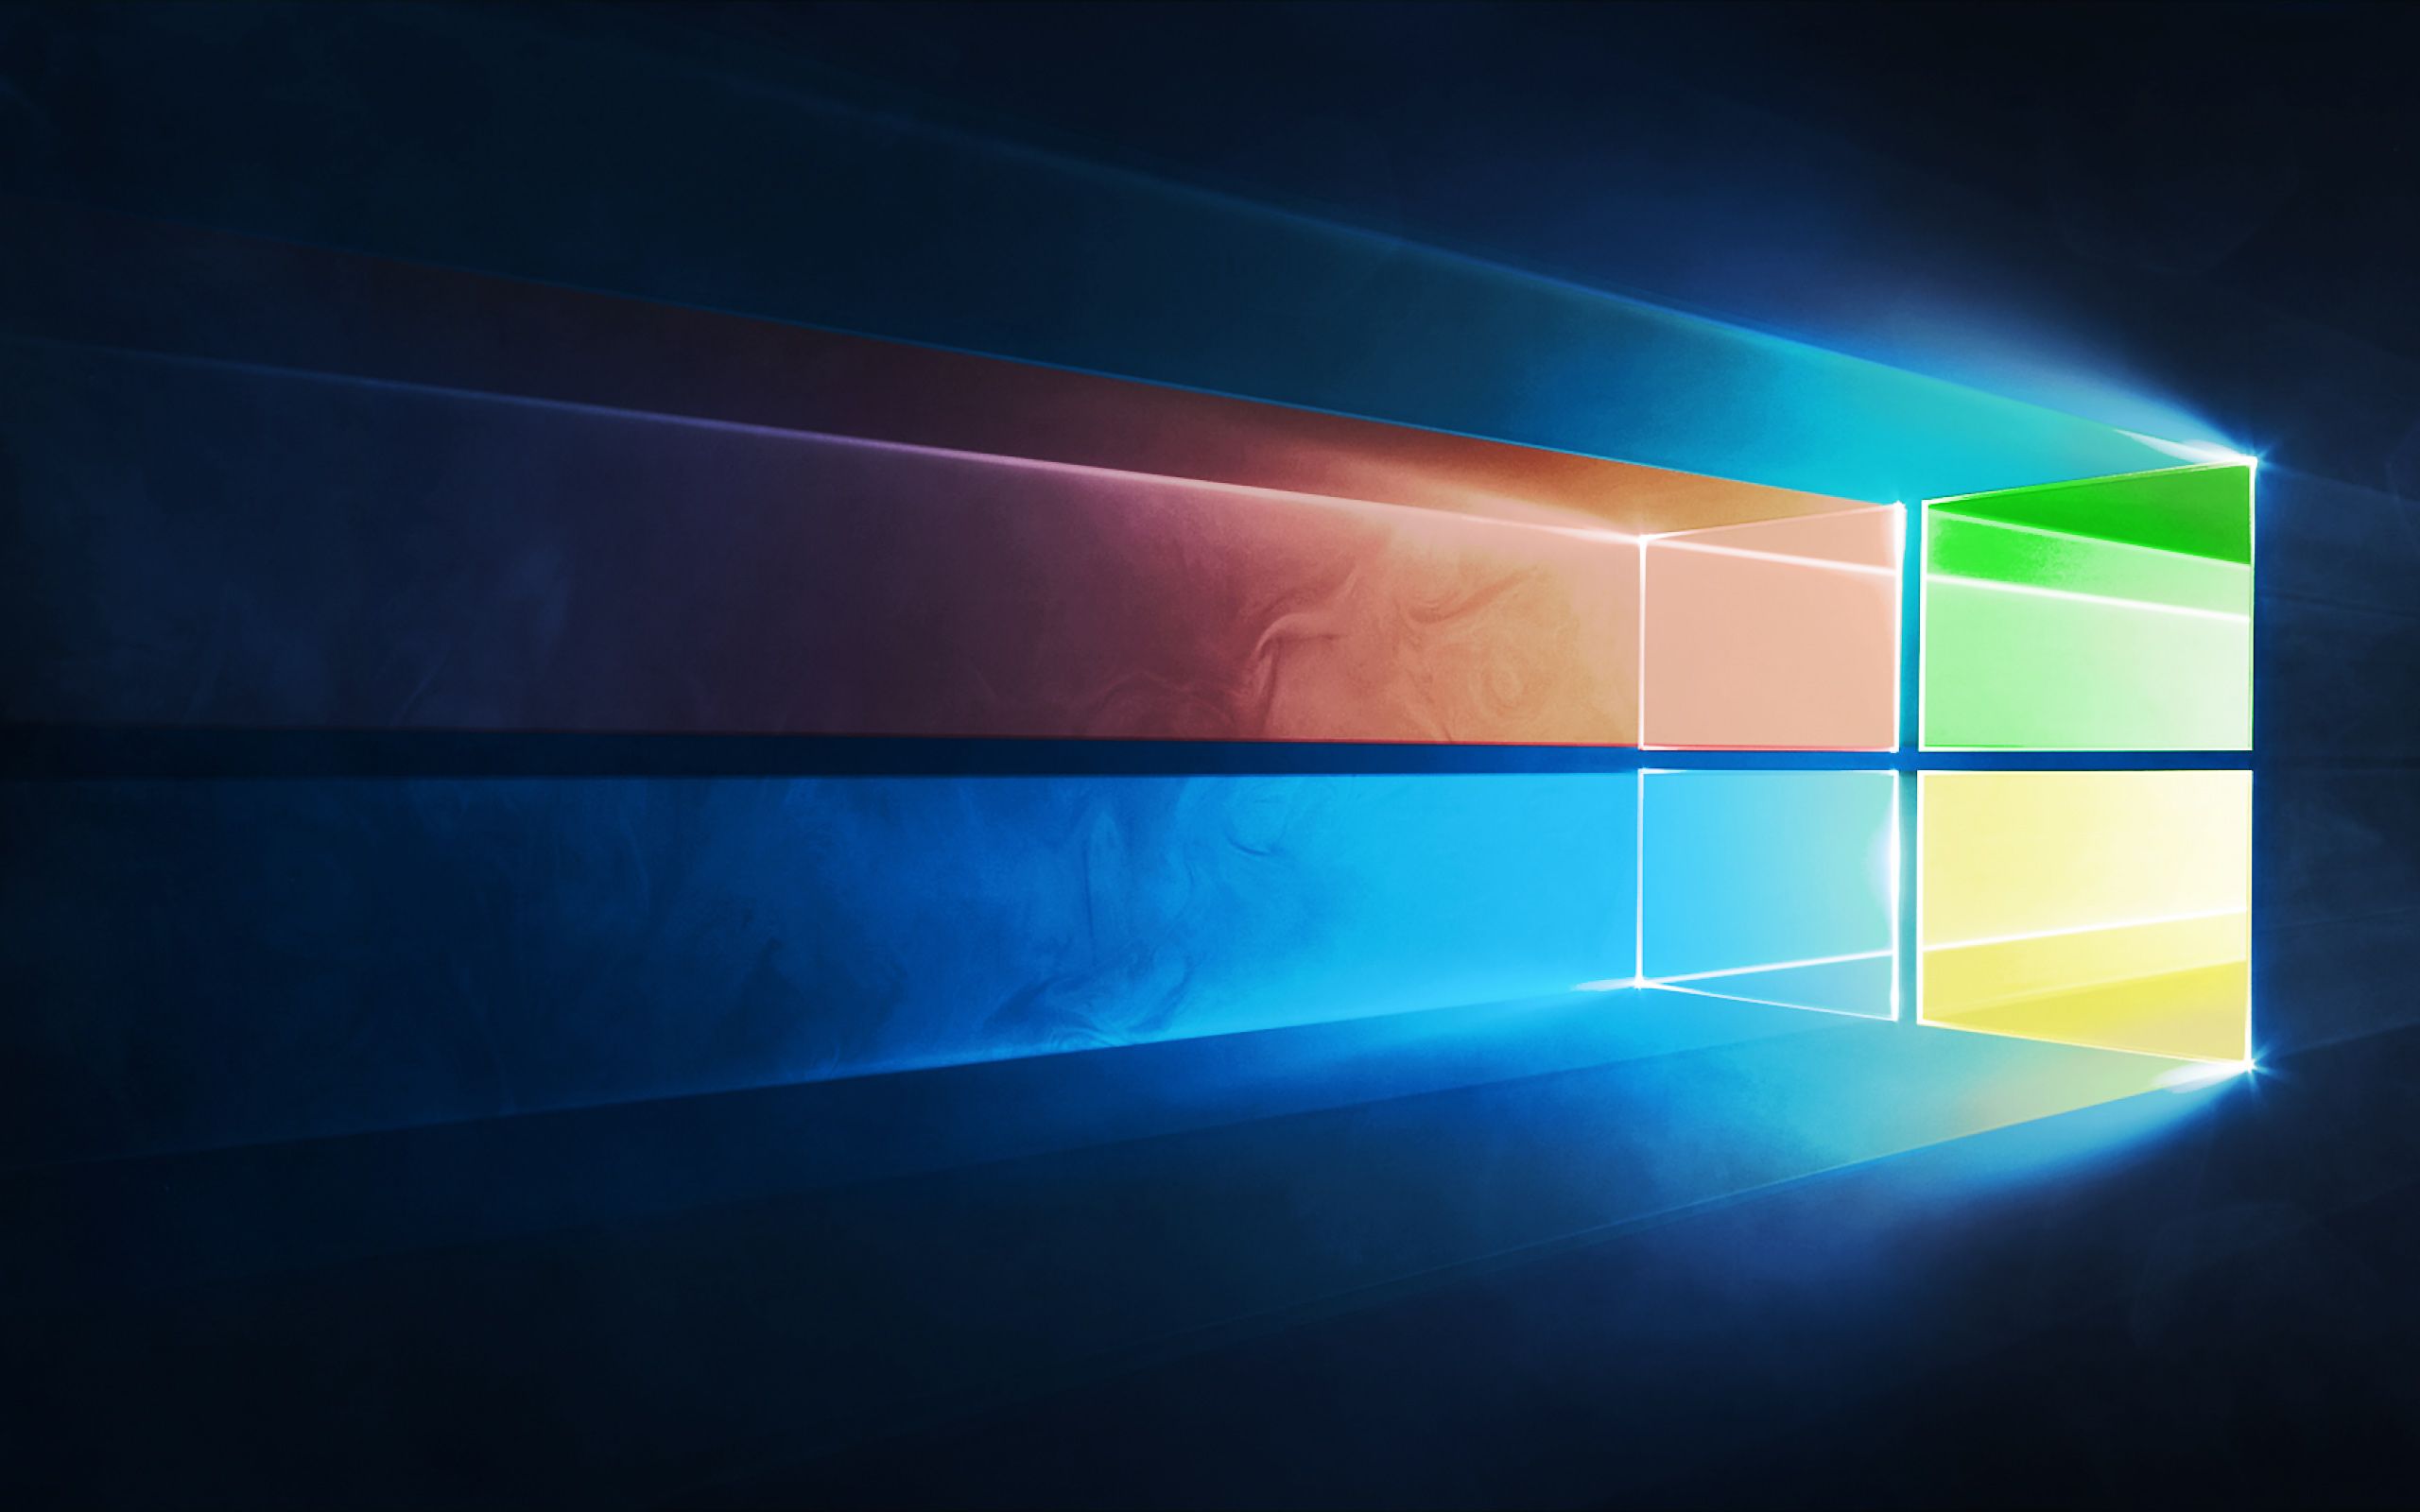 Microsoft Windows 4K Wallpaper, Windows 10, Colorful, Blue background, Technology,